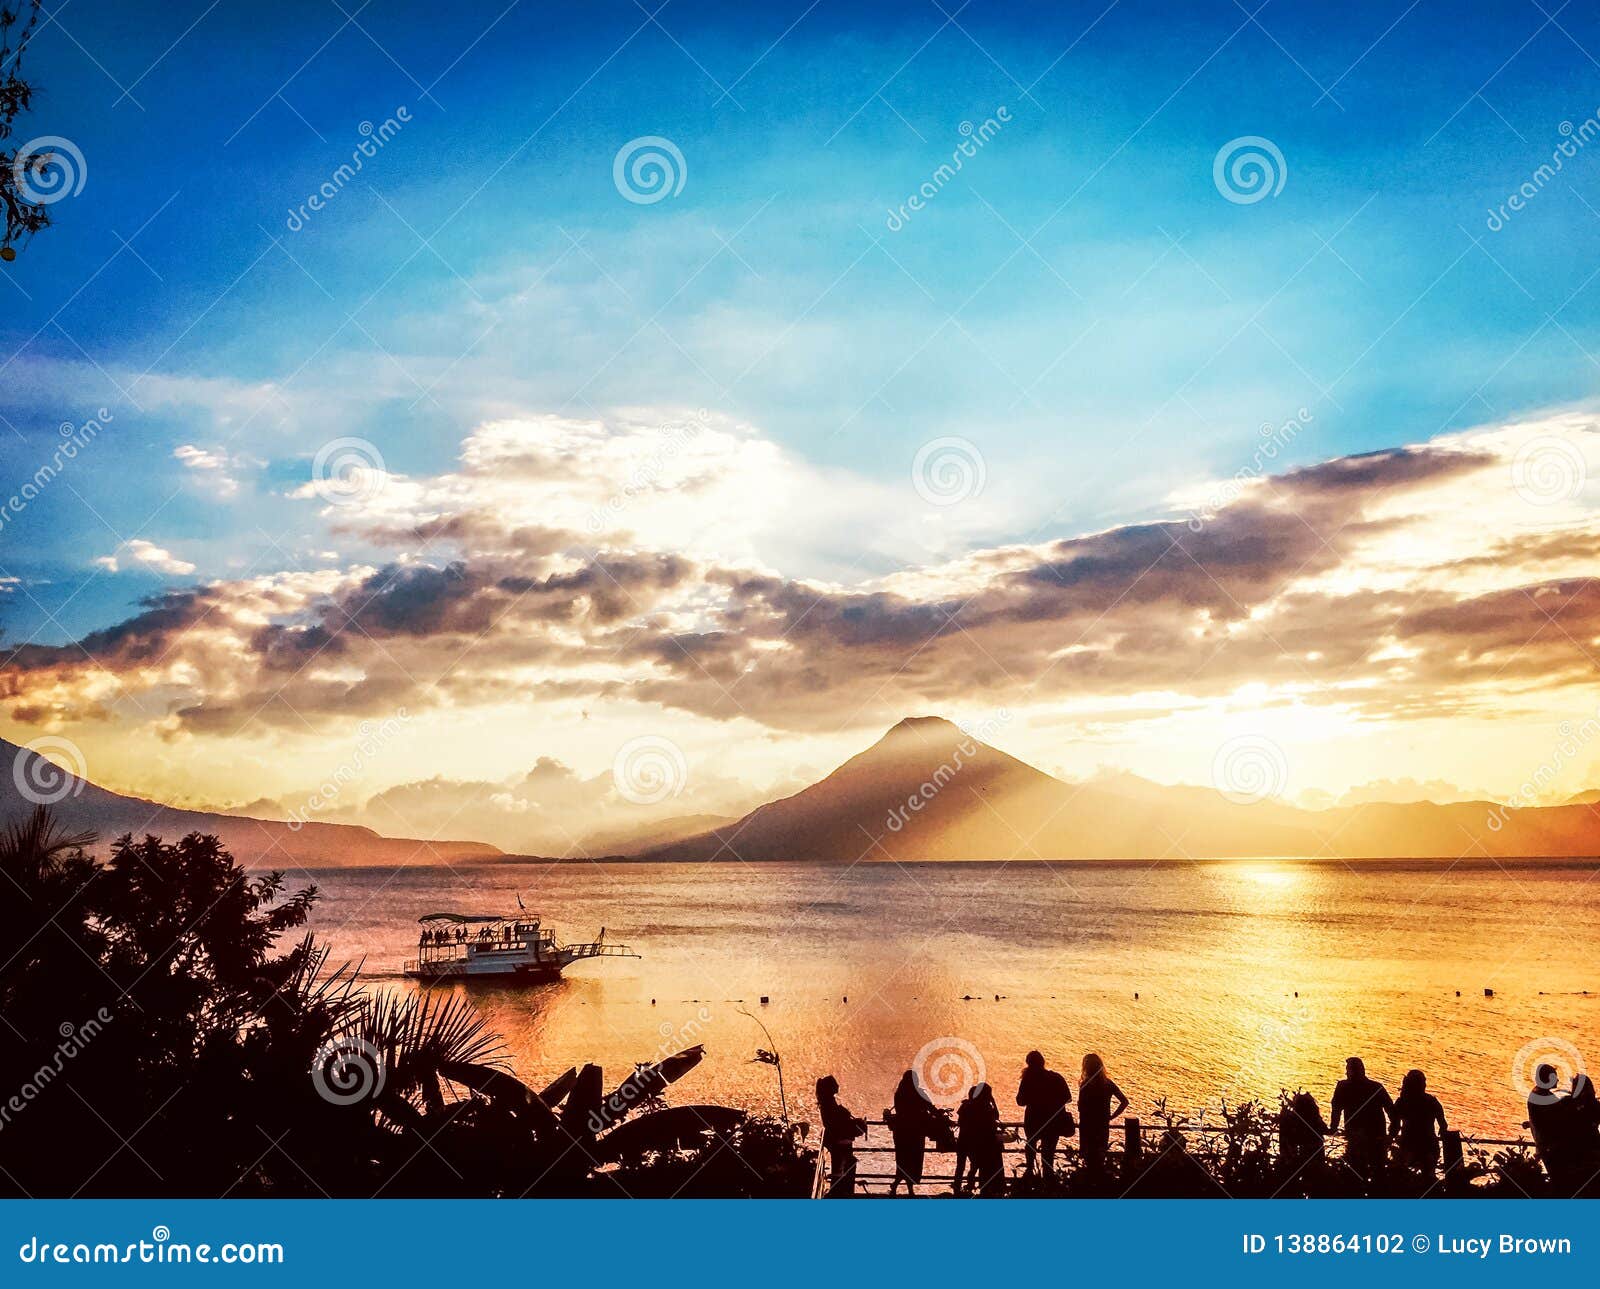 sunset view of lake atitlan & volcano, guatemala, central america